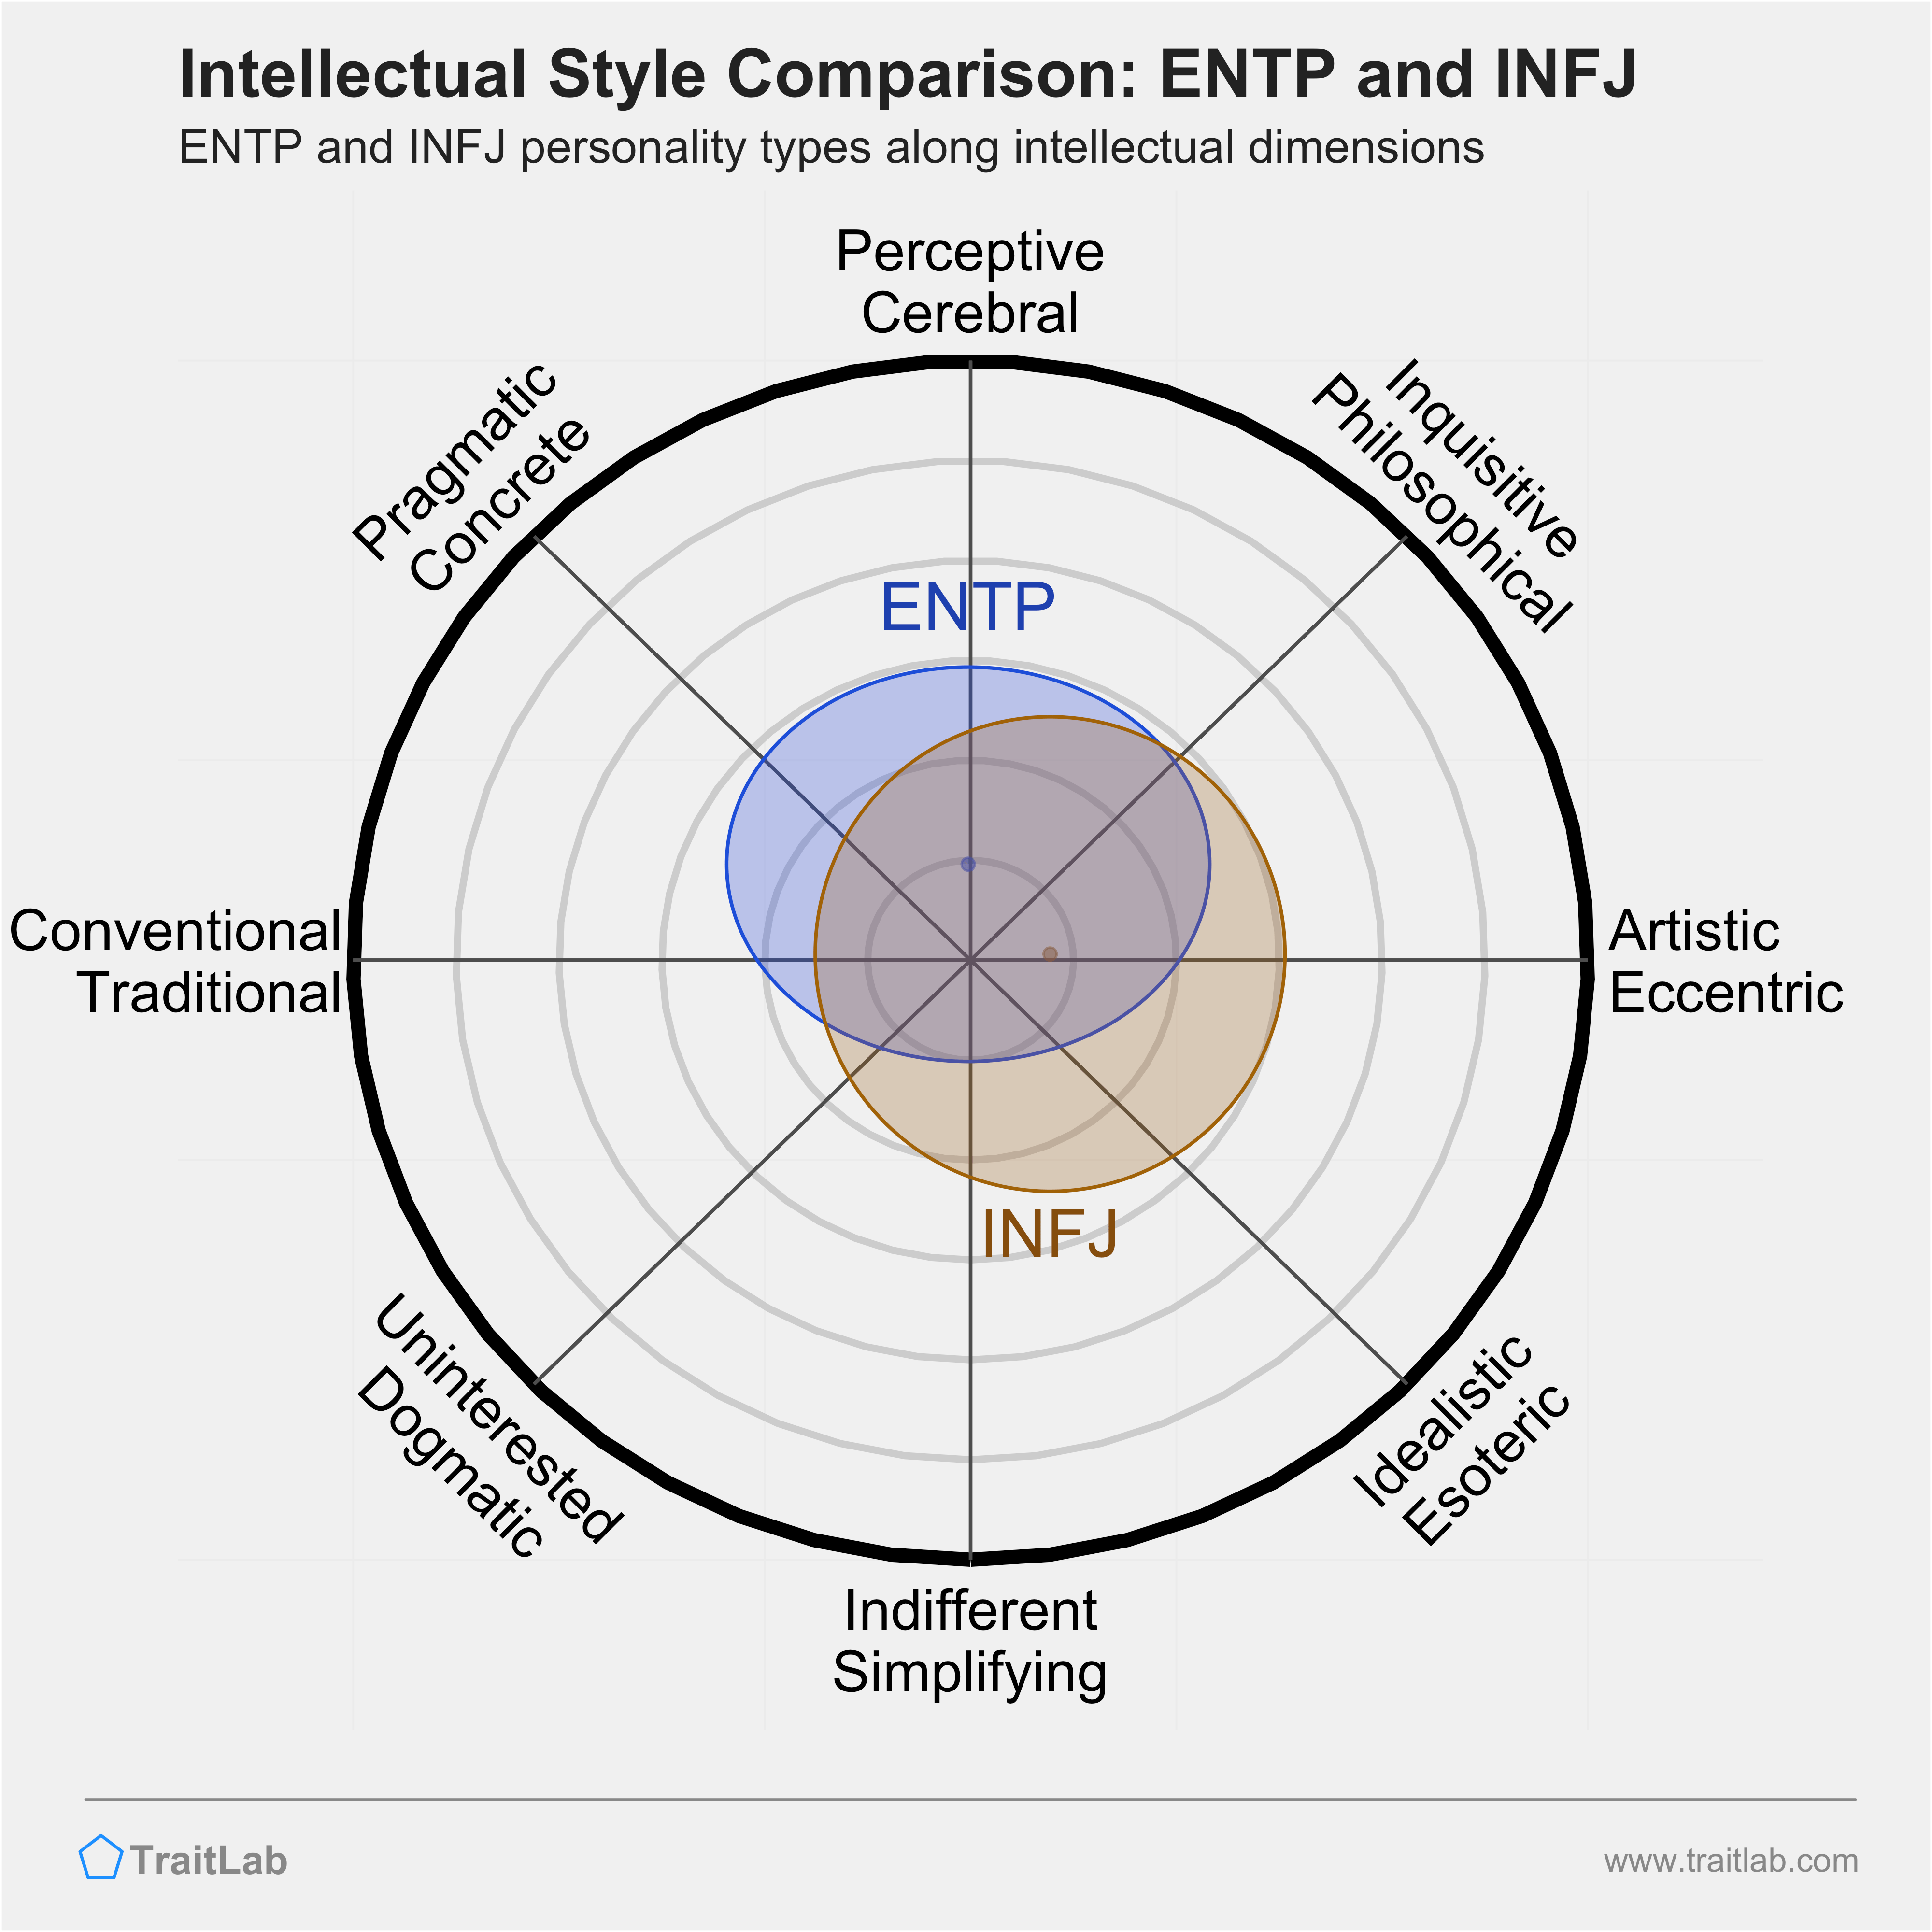 ENTP and INFJ comparison across intellectual dimensions